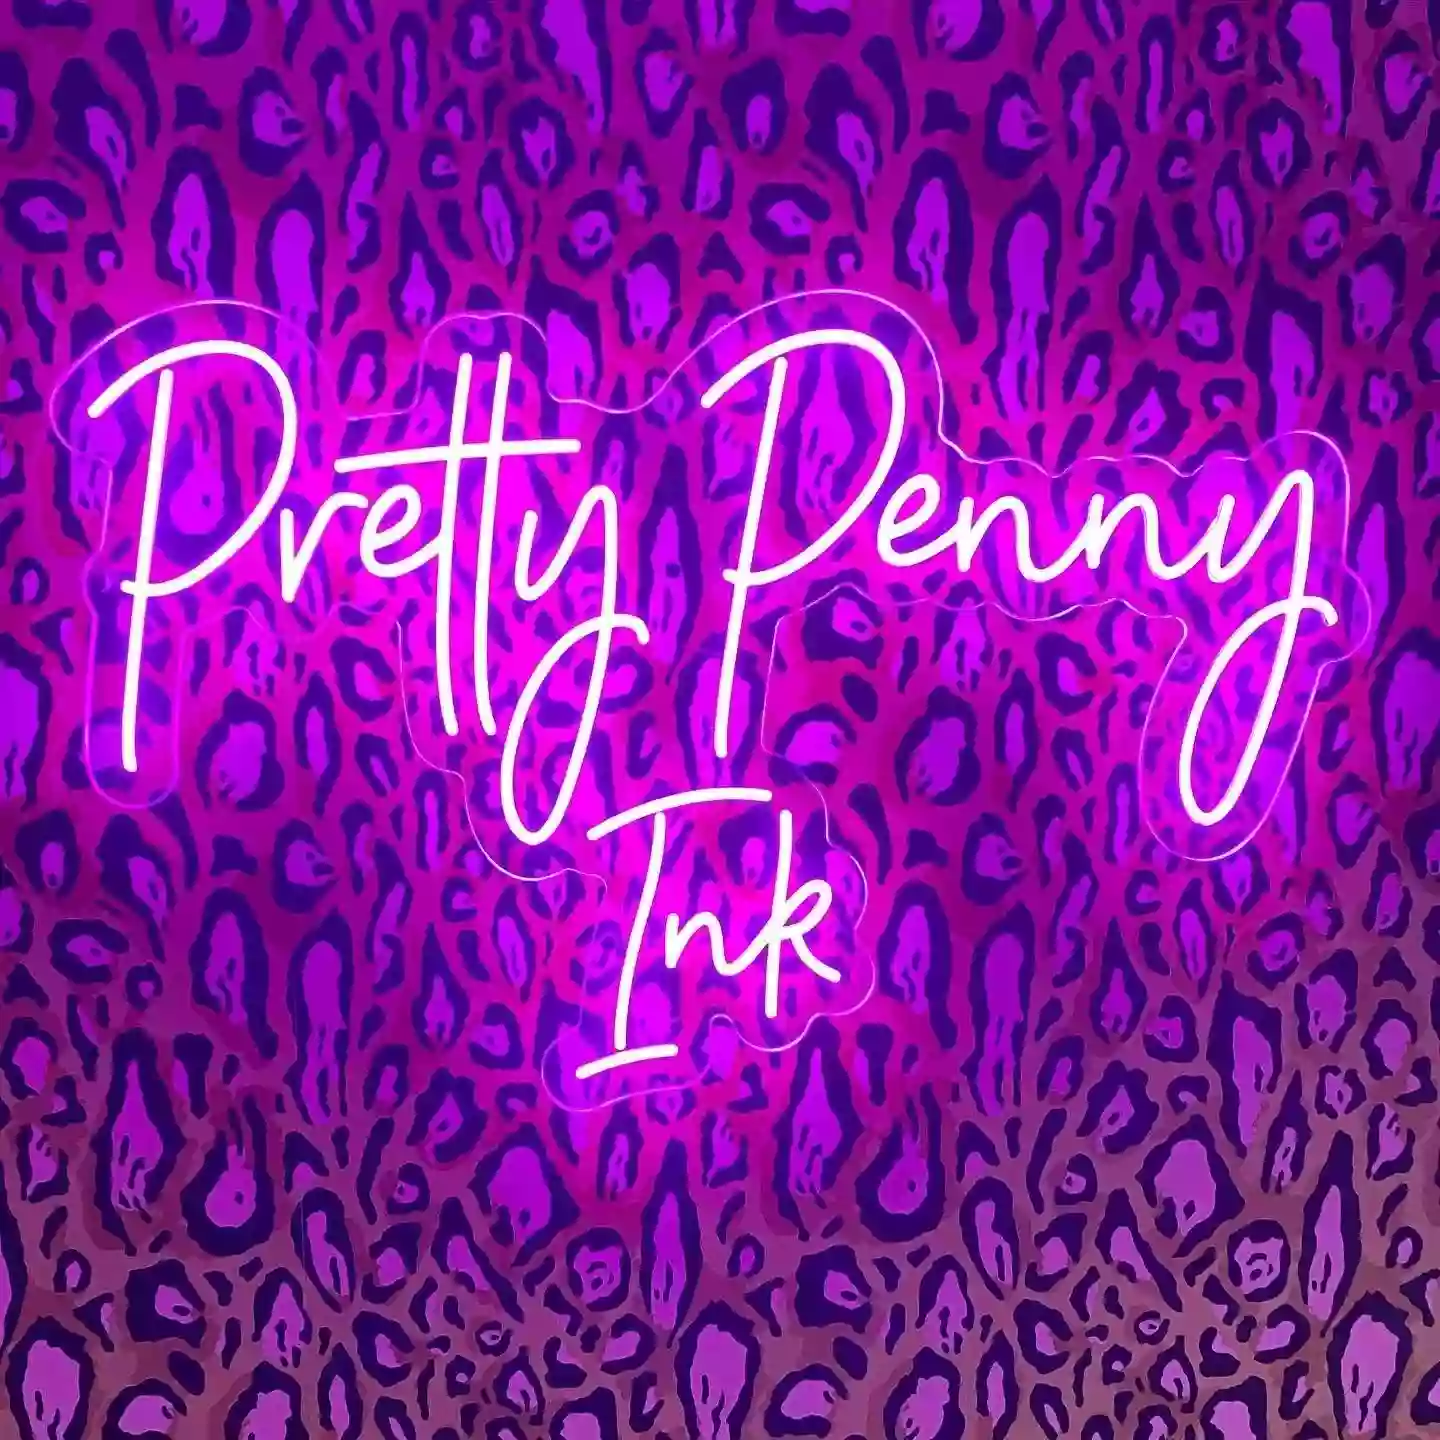 Pretty Penny Ink